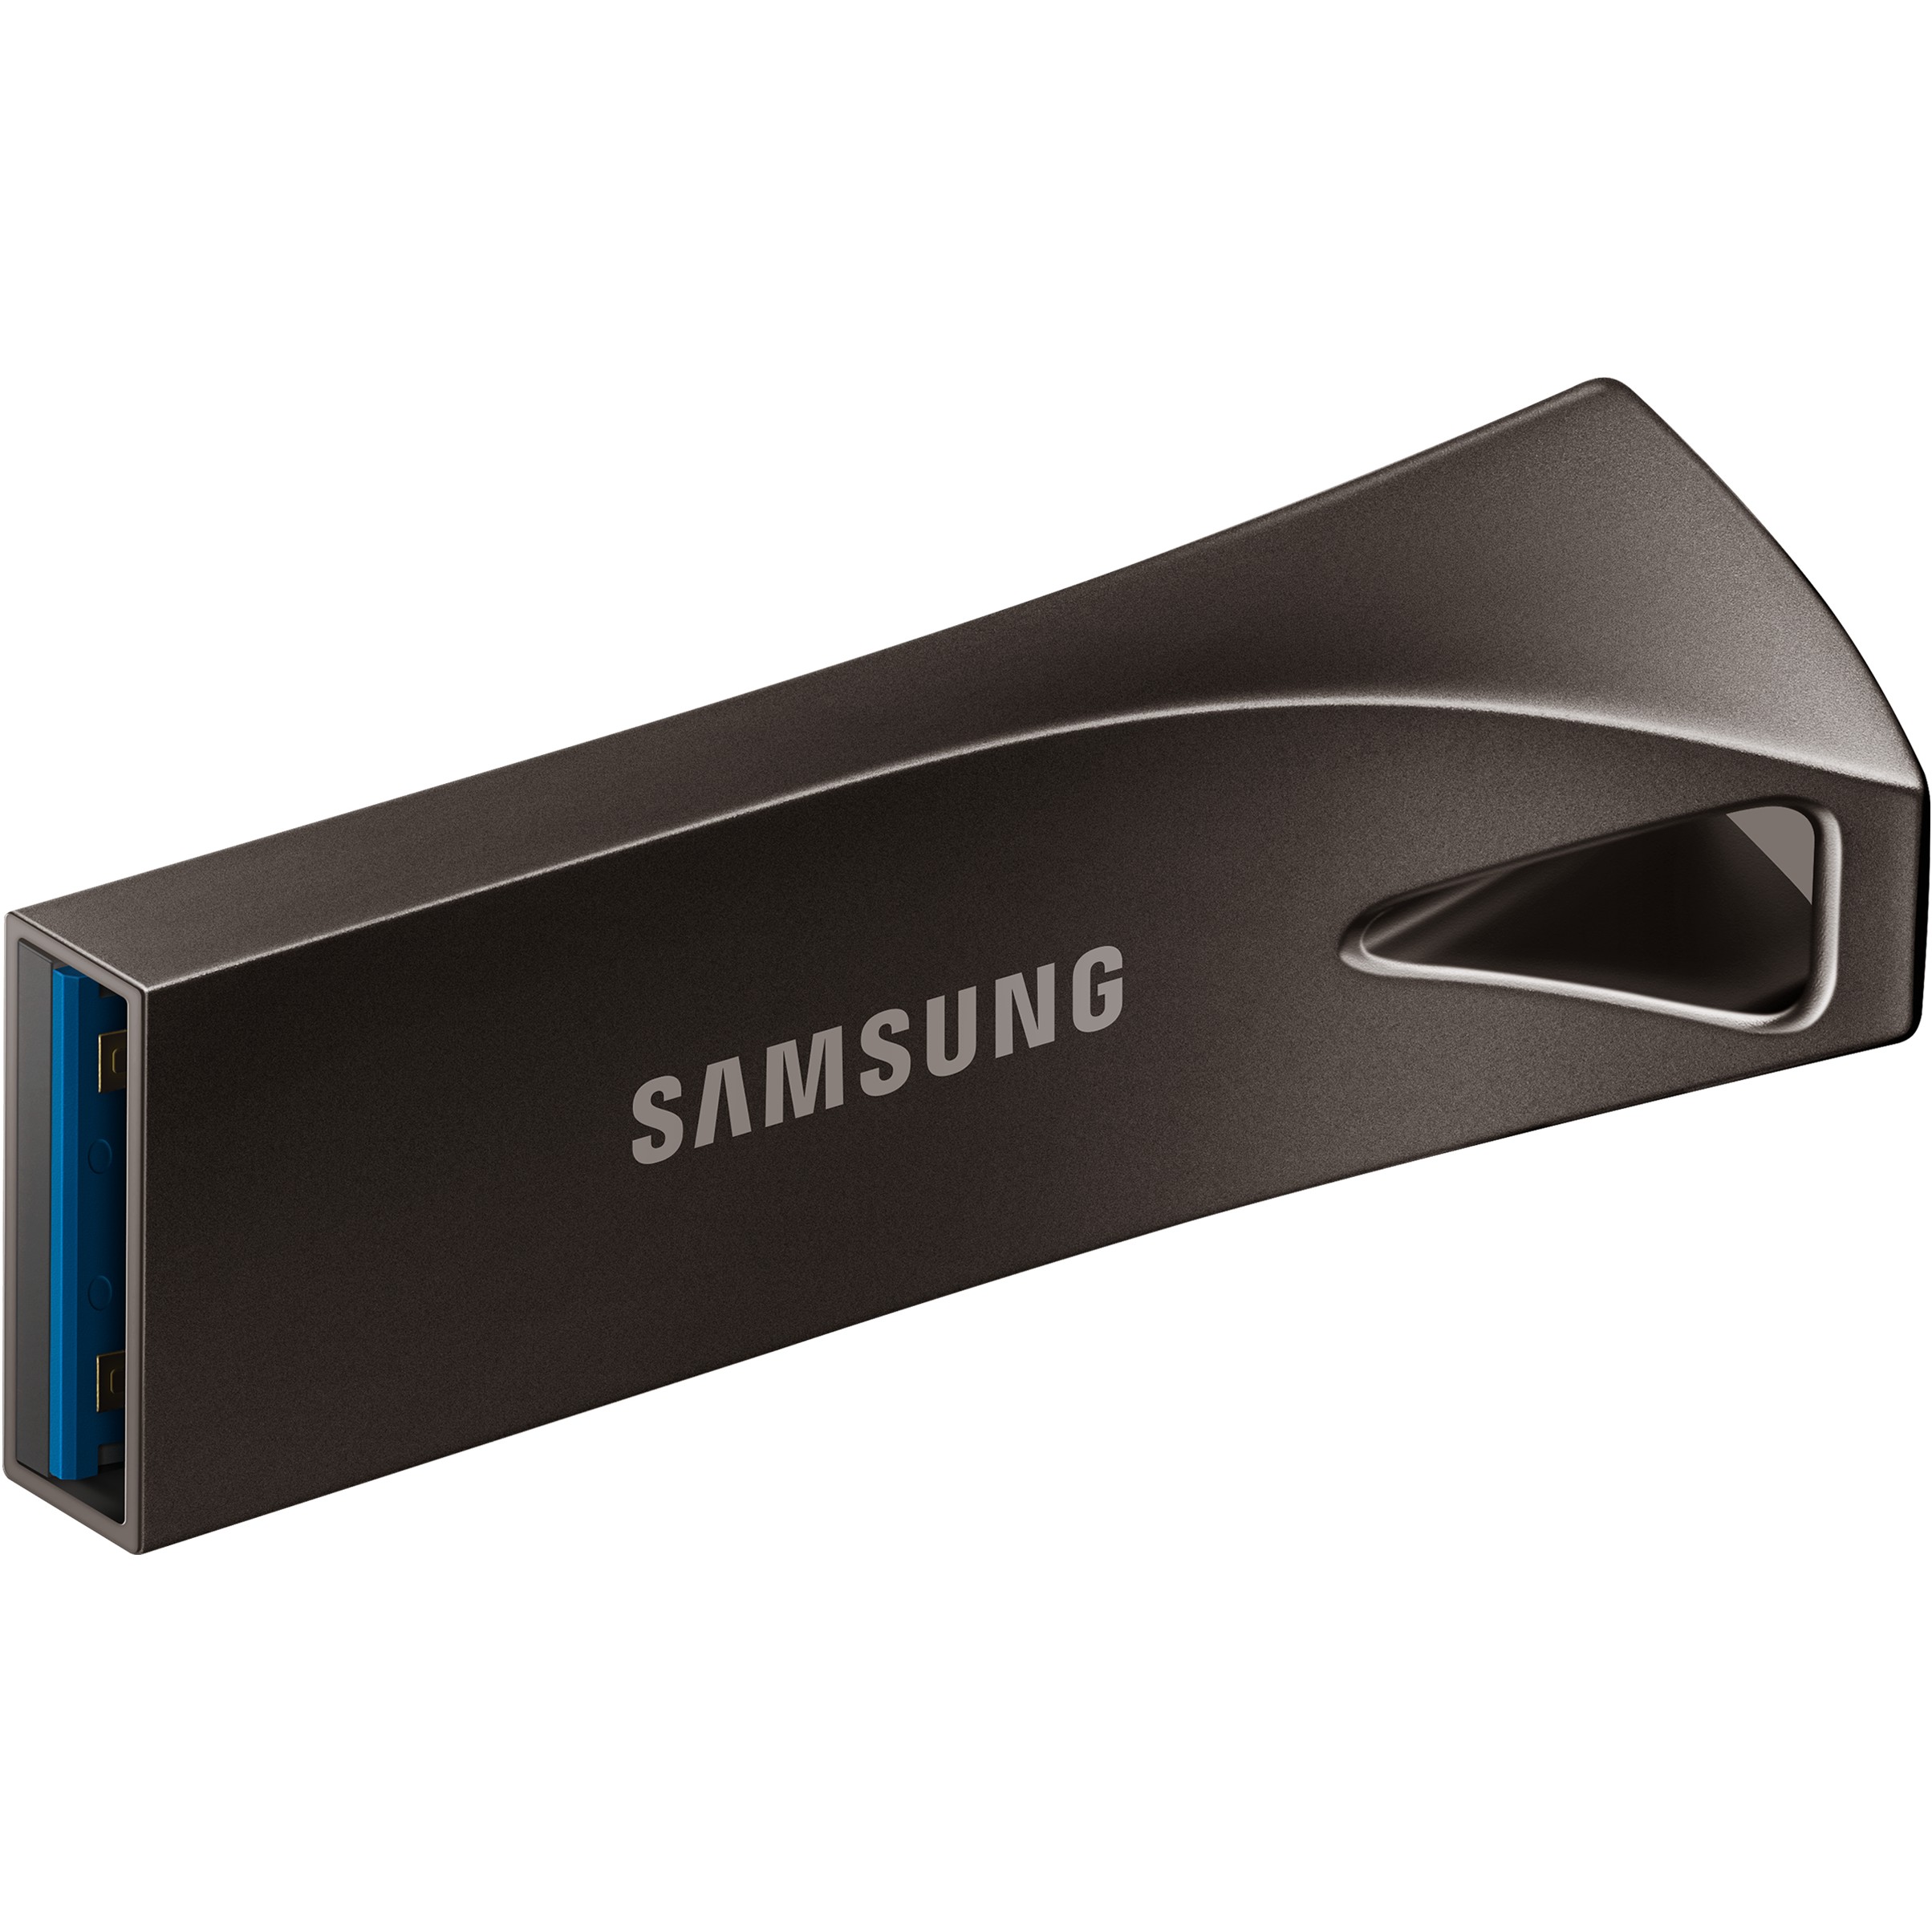 SAMSUNG MUF-128BE4/APC, USB-Stick, Samsung MUF-128BE USB  (BILD5)